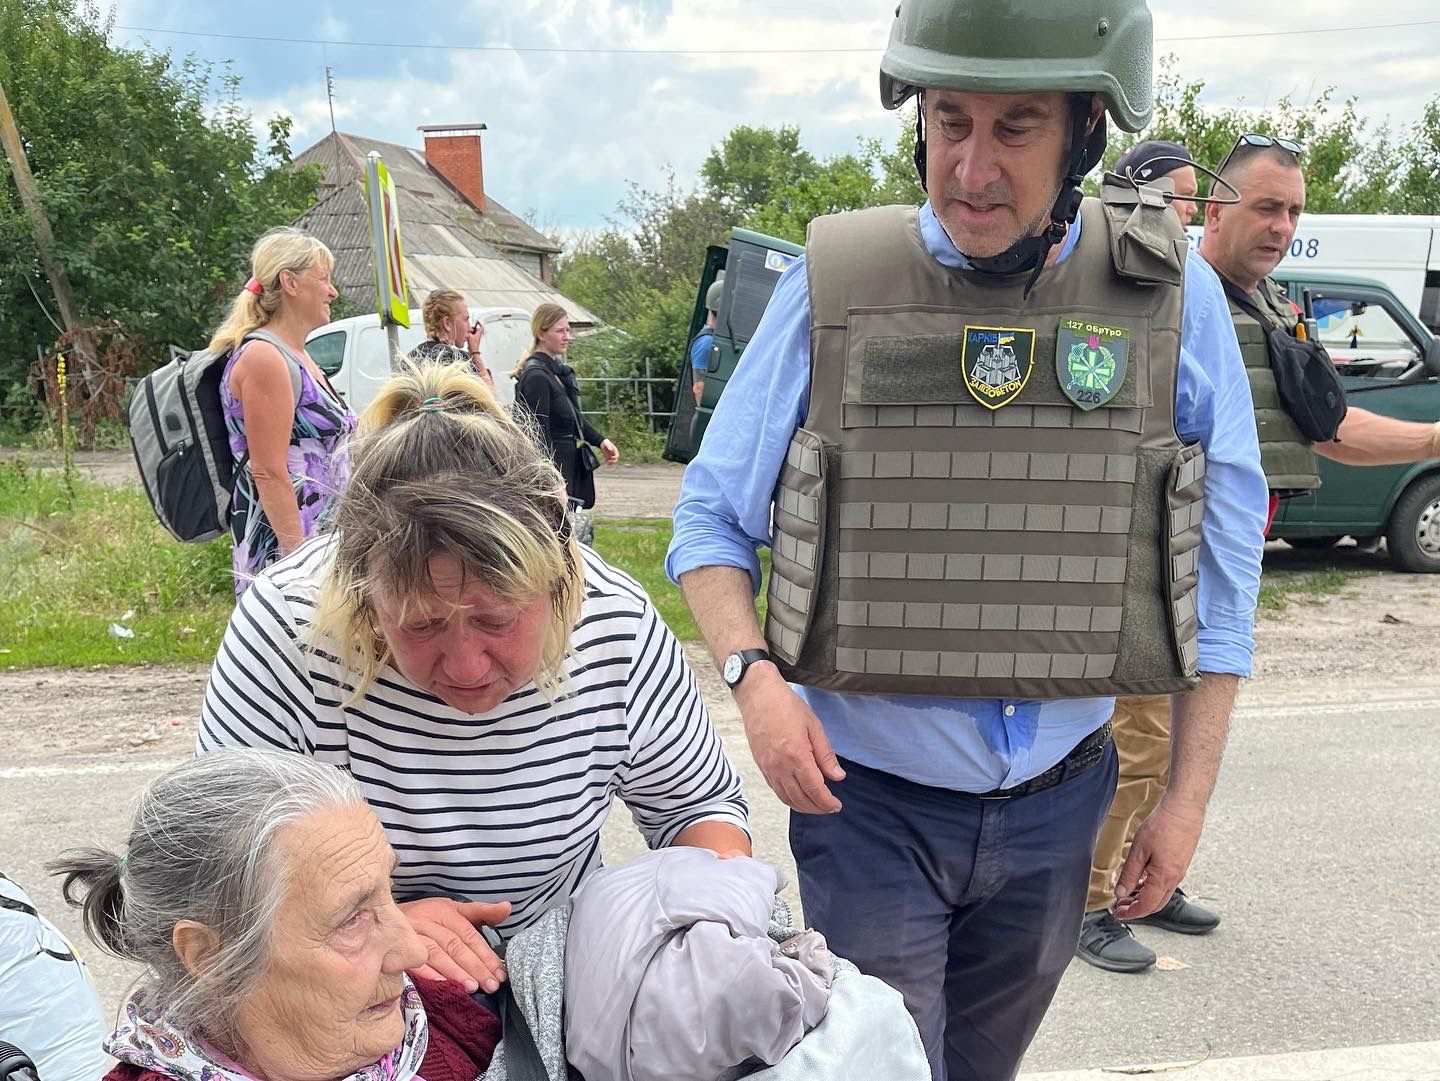 Brooks Newmark at Pechenihy (Russian/ Ukrainian checkpoint in Kharkiv Oblast) on 25 July